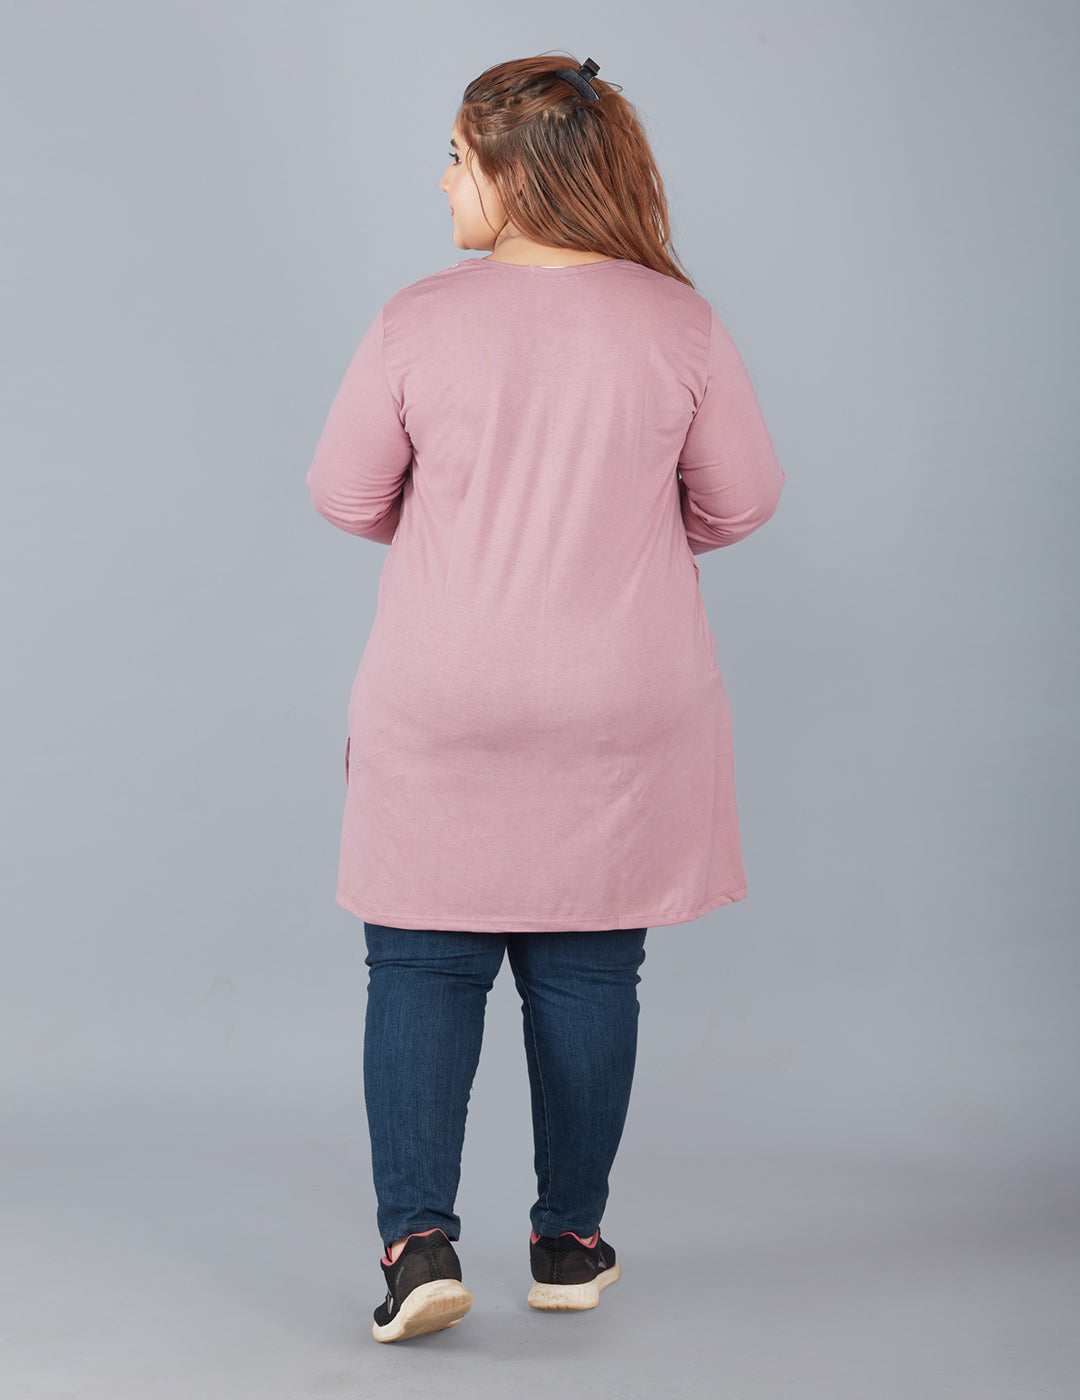 Cotton Long Top for Women Plus Size - Full Sleeve - Mauve